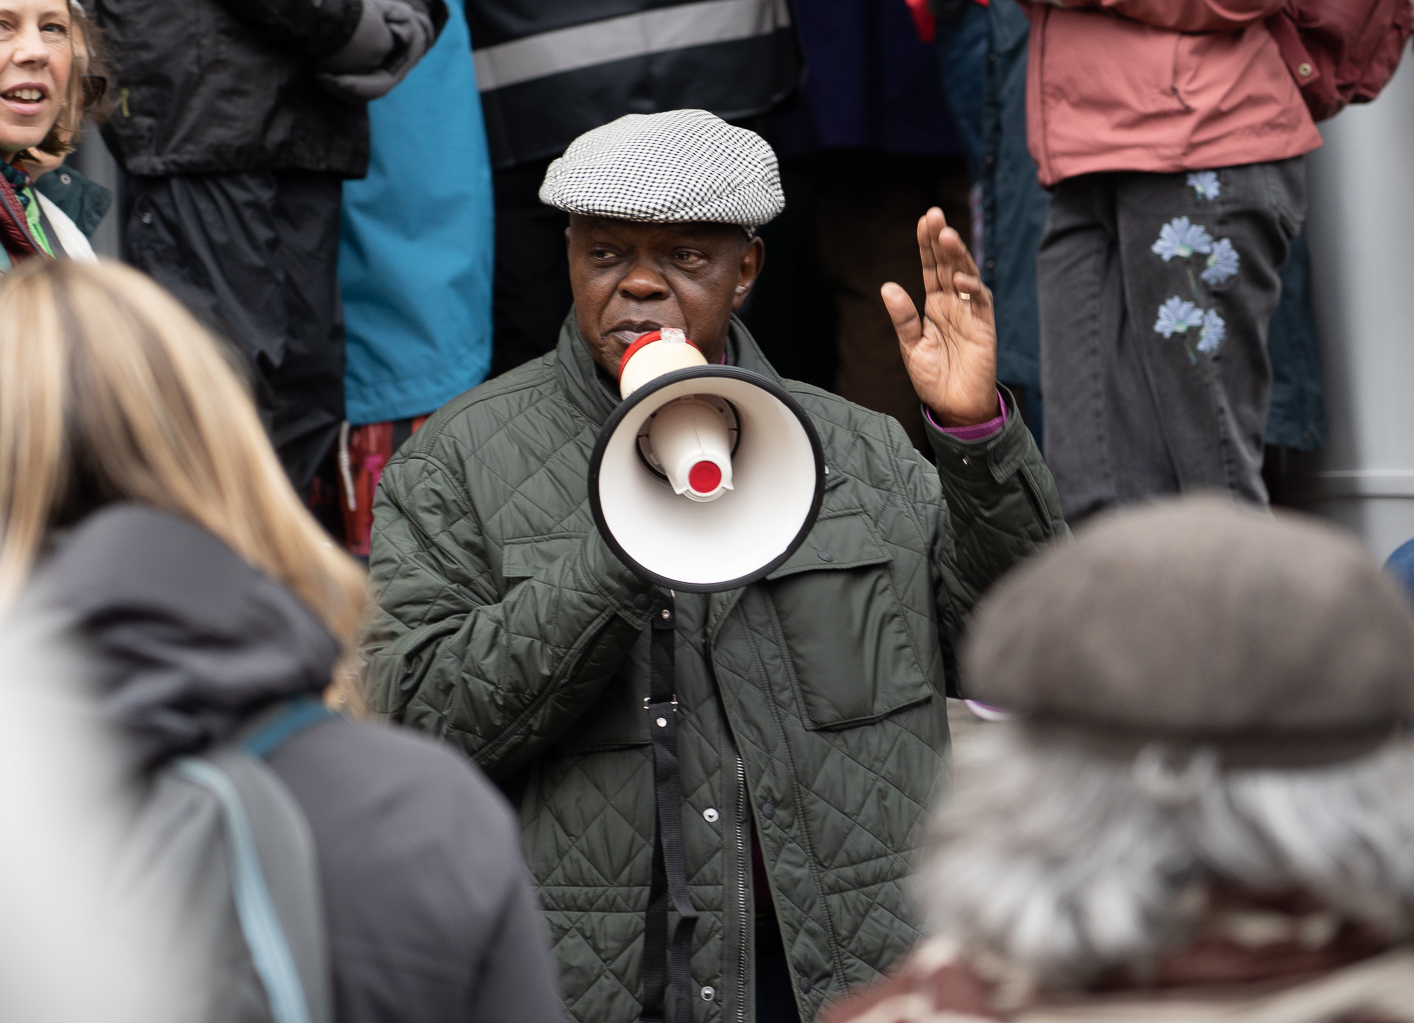 John Sentamu addresses the crowds holding a megaphone.